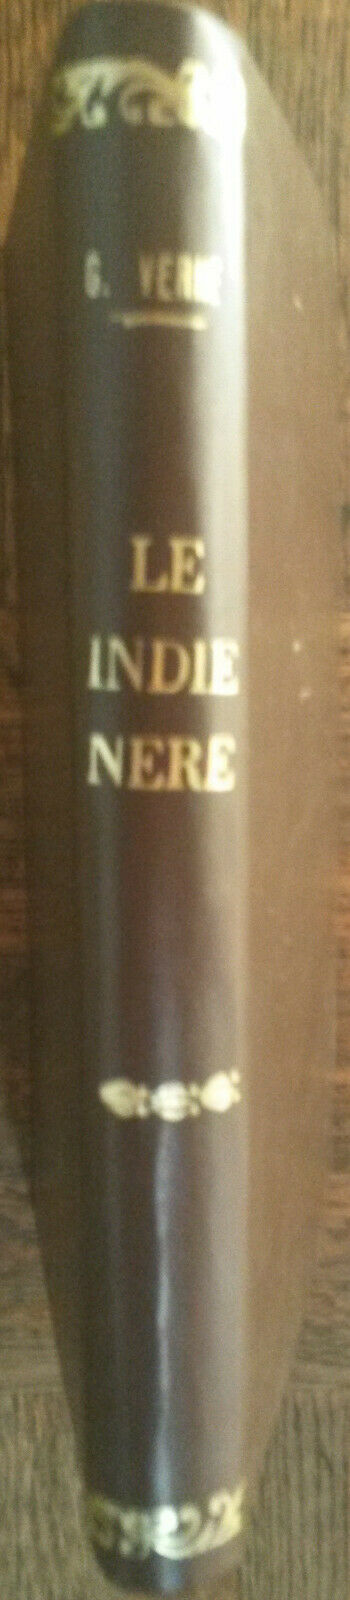 Le Indie nere - Jules Verne - Antonio Bietti & C. Editori,1907 - R